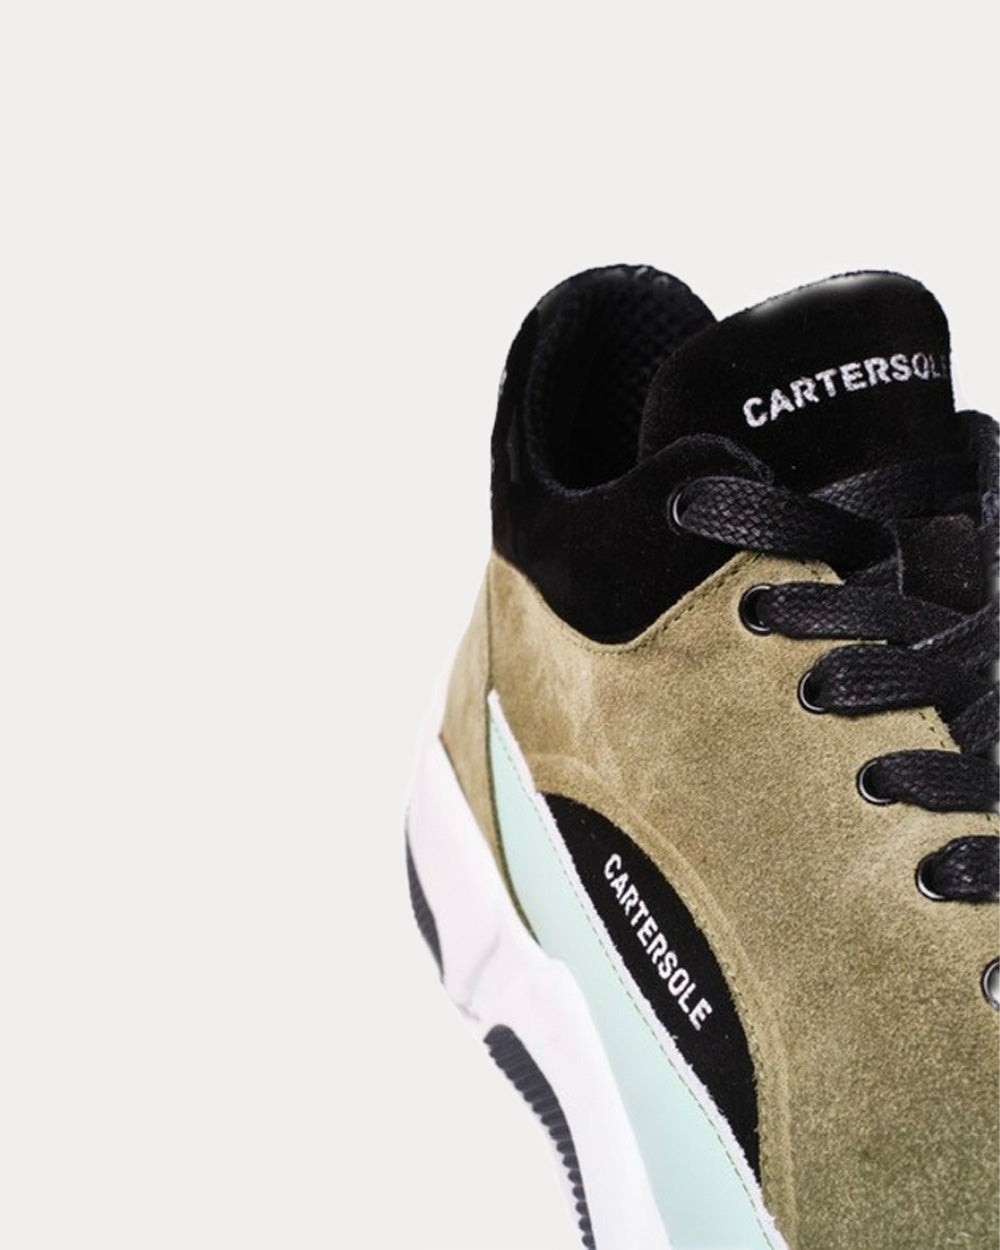 Cartersole - CS Runner Olive Green Low Top Sneakers